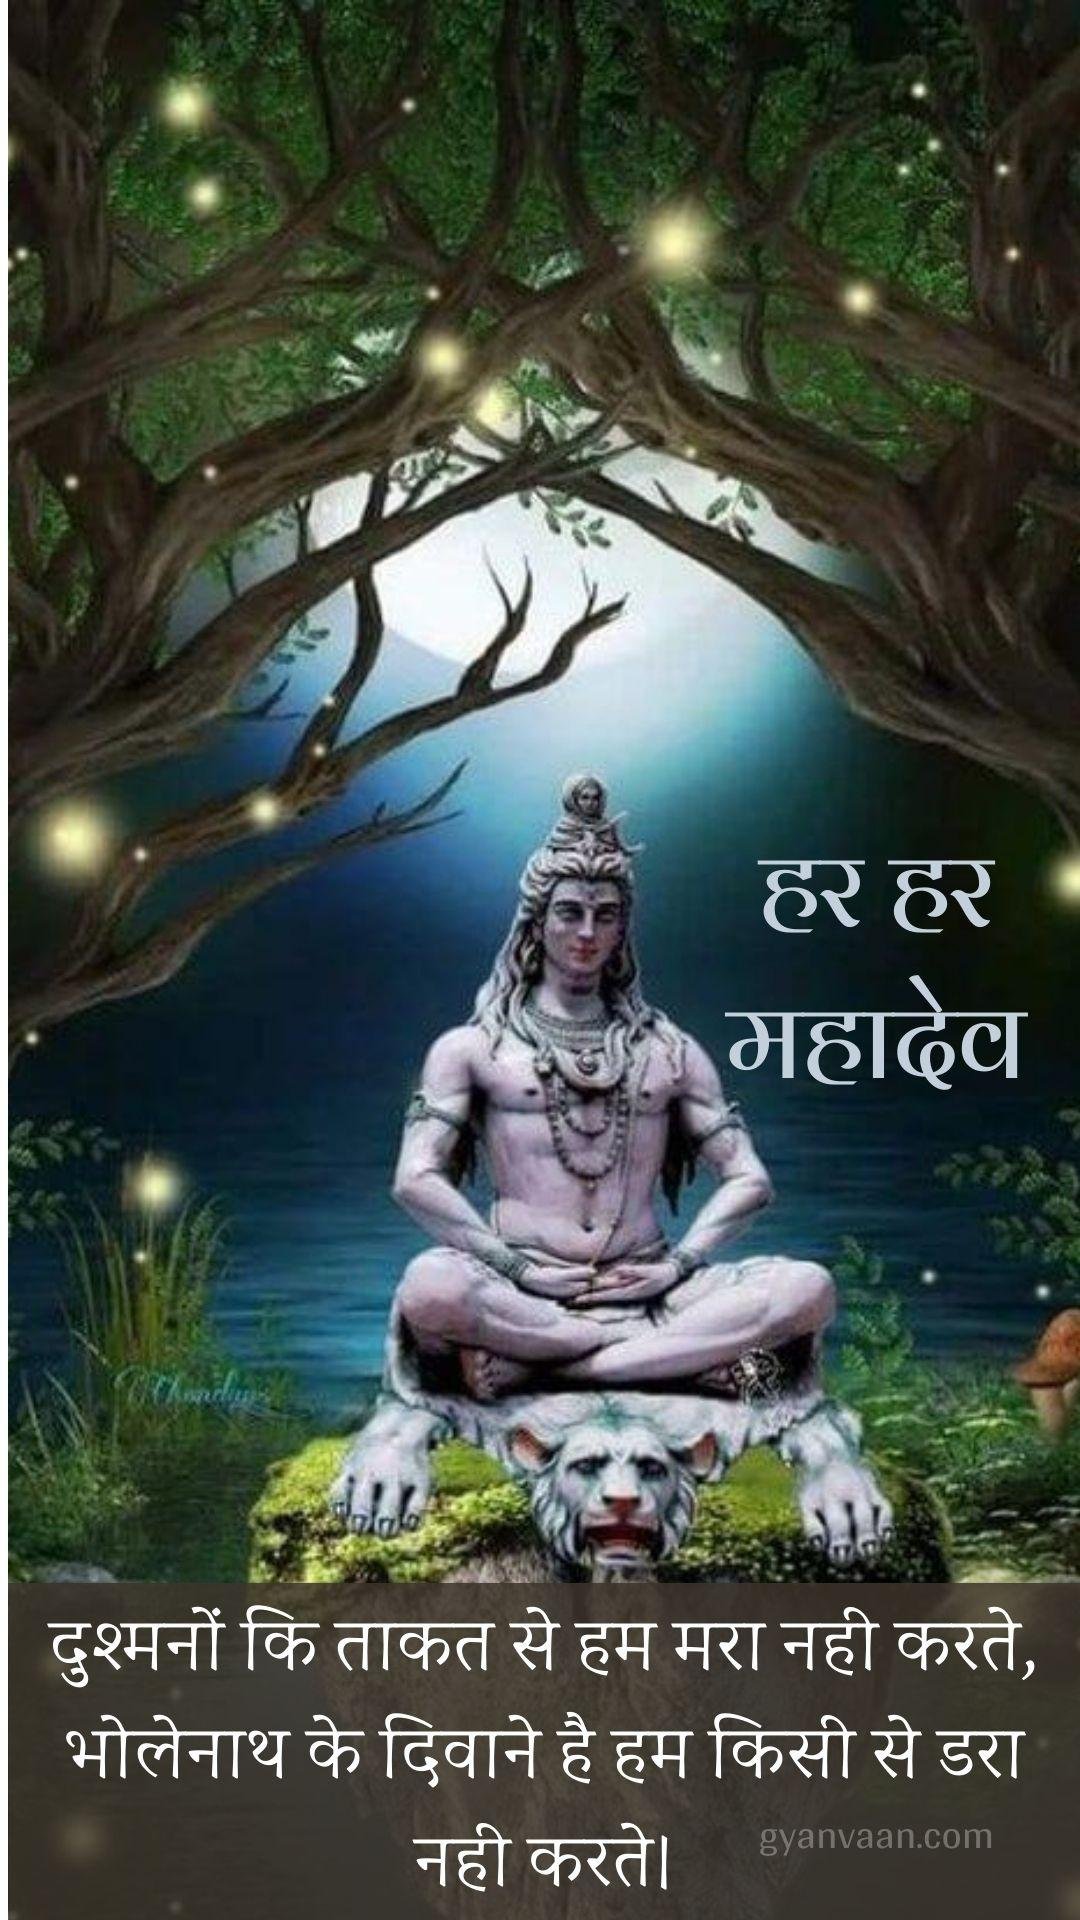 Lord Shiva Mahadev Quotes And Mahakal Status In Hindi For Mobile 13 - Shiva Quotes